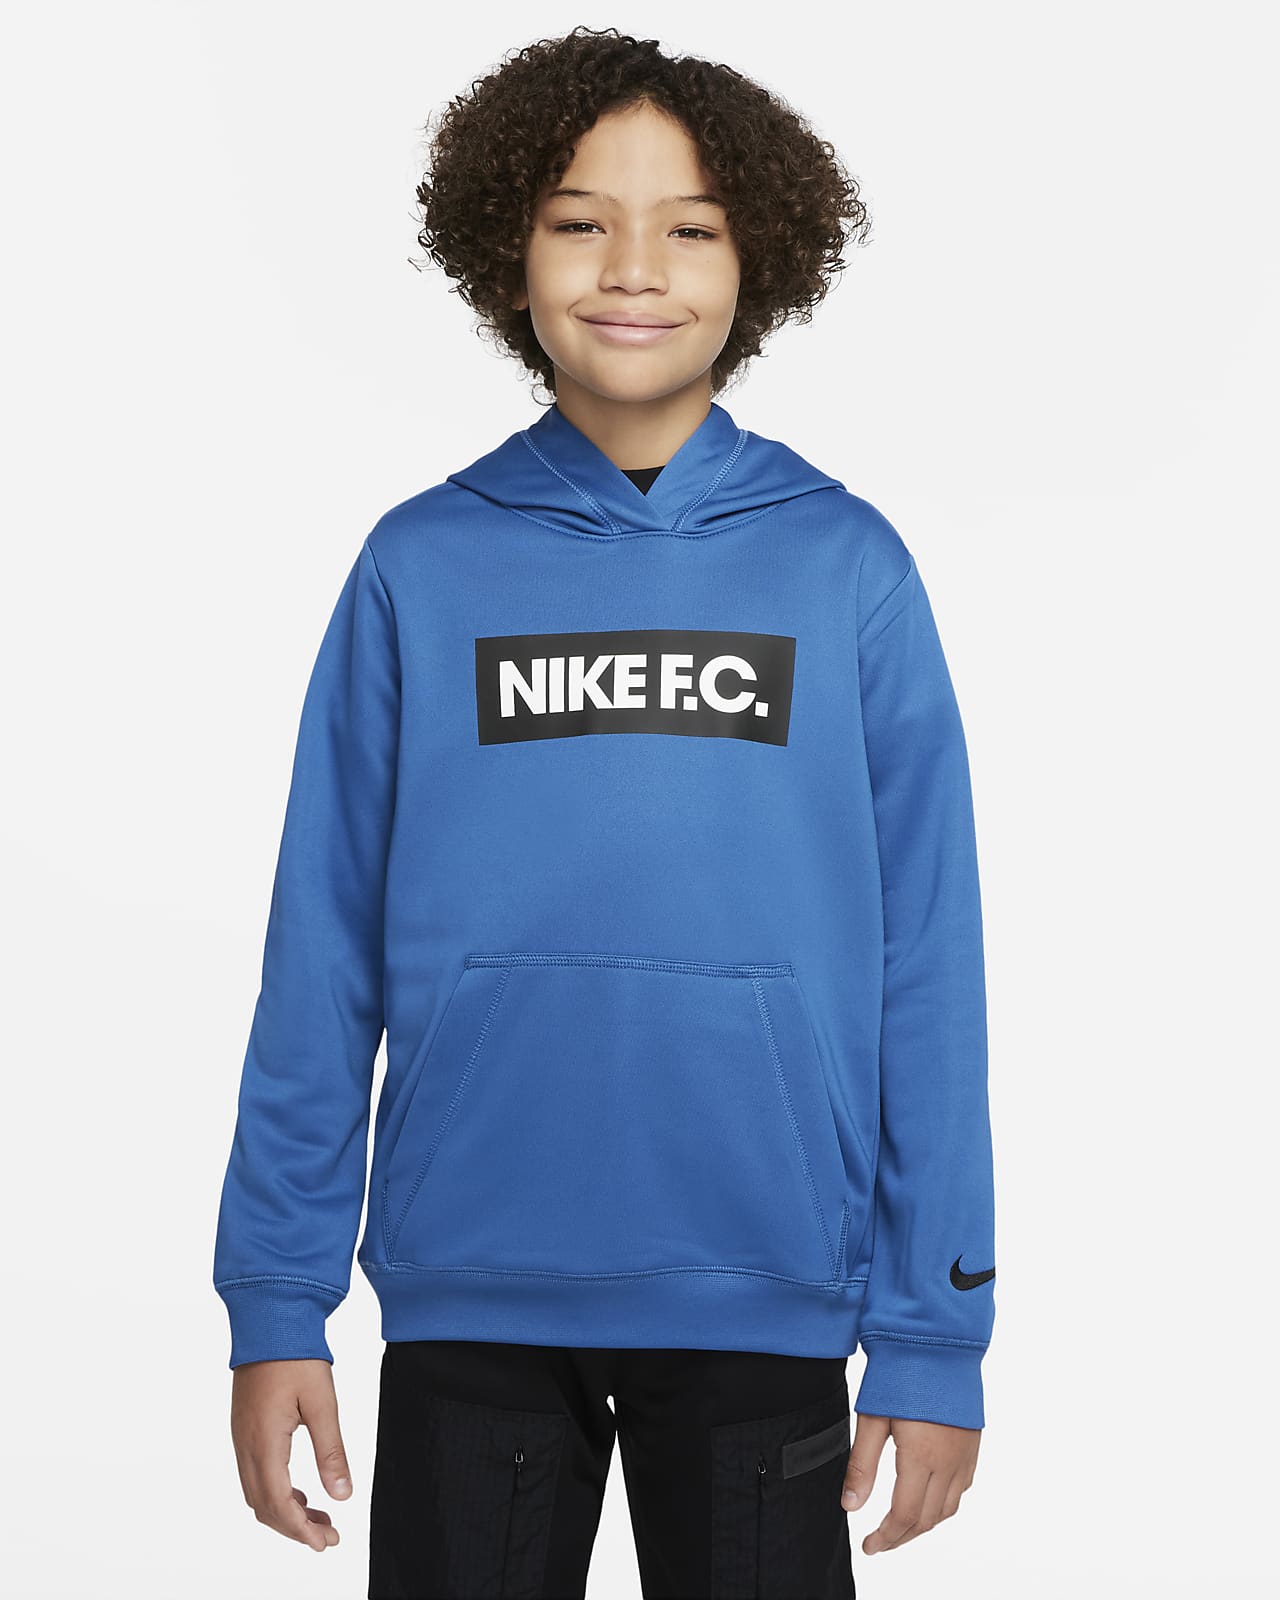 Nike F.C. Fußball-Hoodie für ältere Kinder